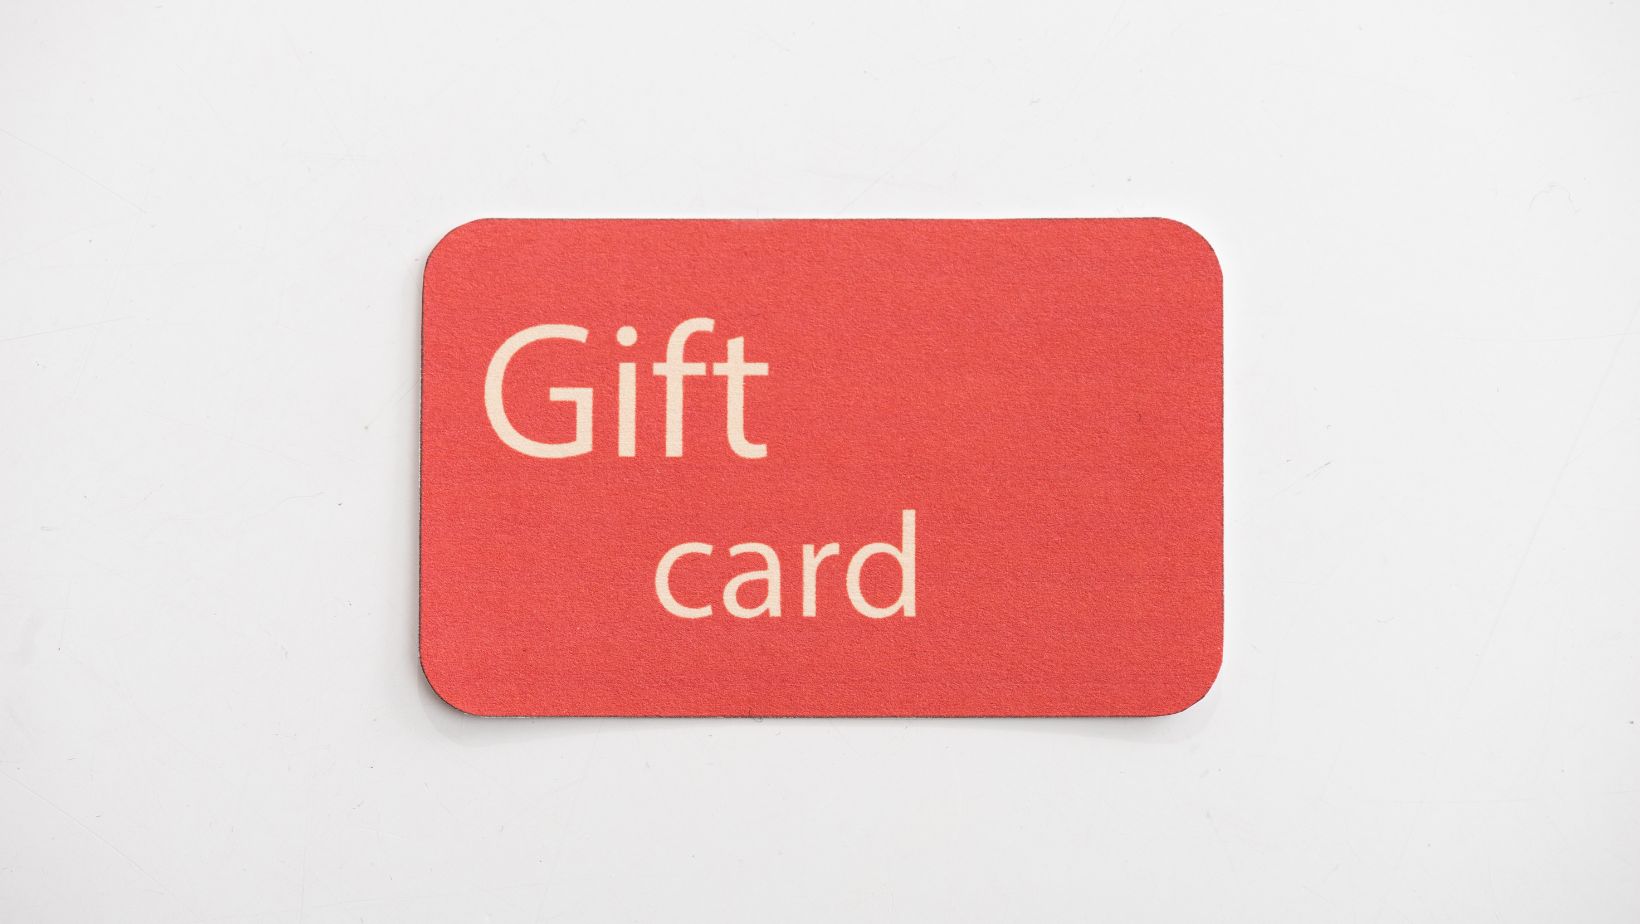 www.mysubwaycard.com gift card balance